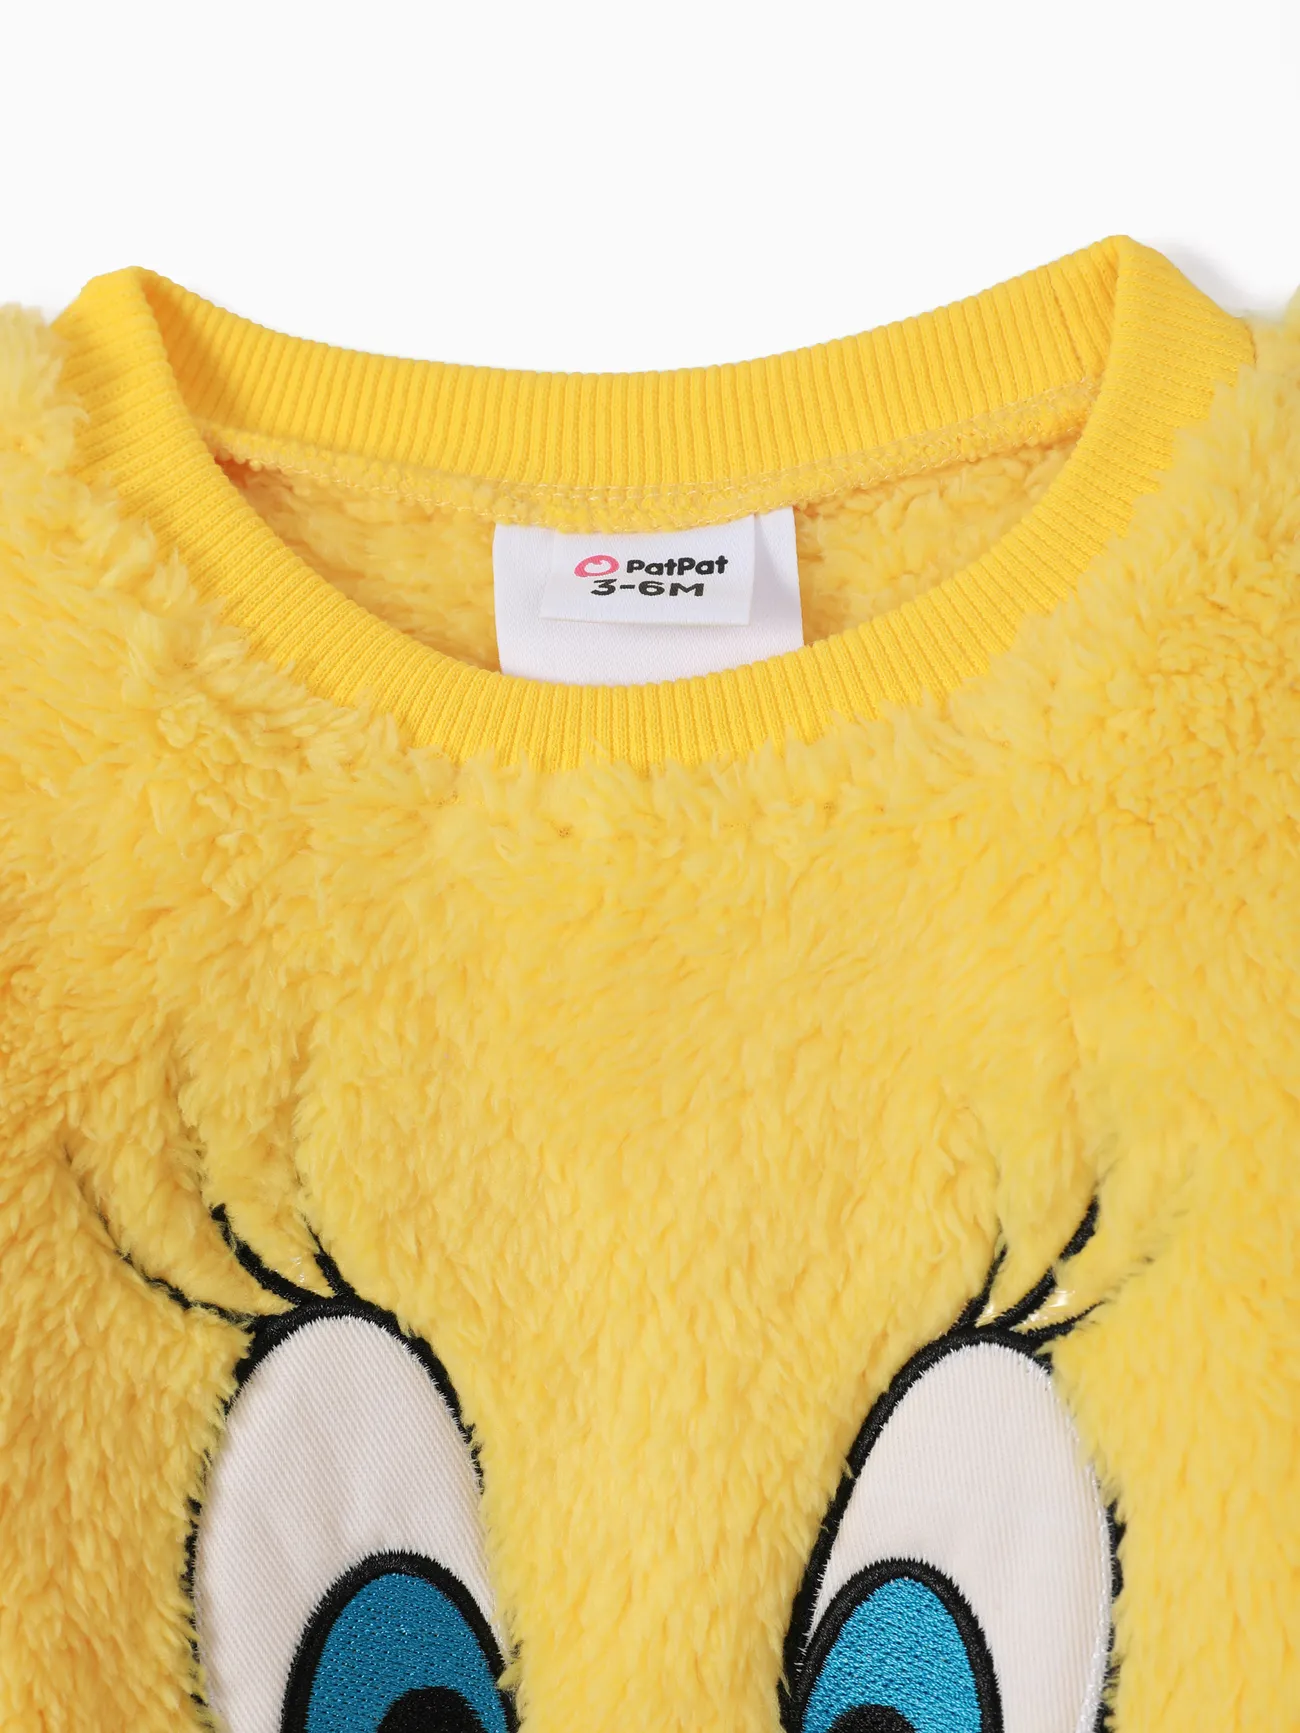 Looney Tunes Baby Unisex Tiere Kindlich Langärmelig Sweatshirts gelb big image 1